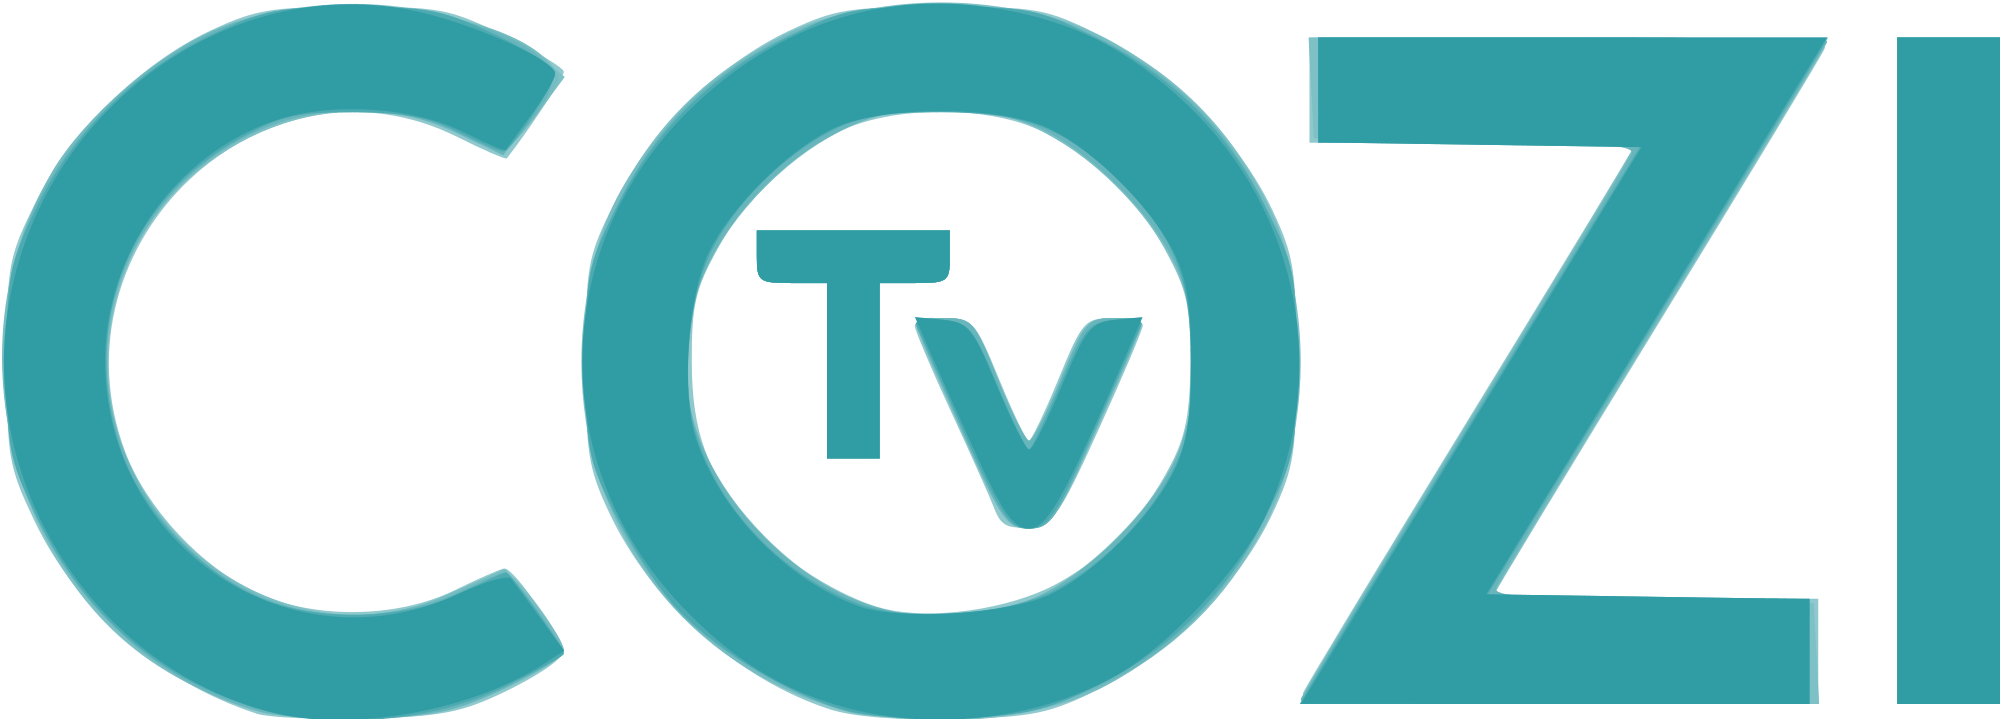 Cozi Logo - File:Cozi TV logo.svg - Wikimedia Commons